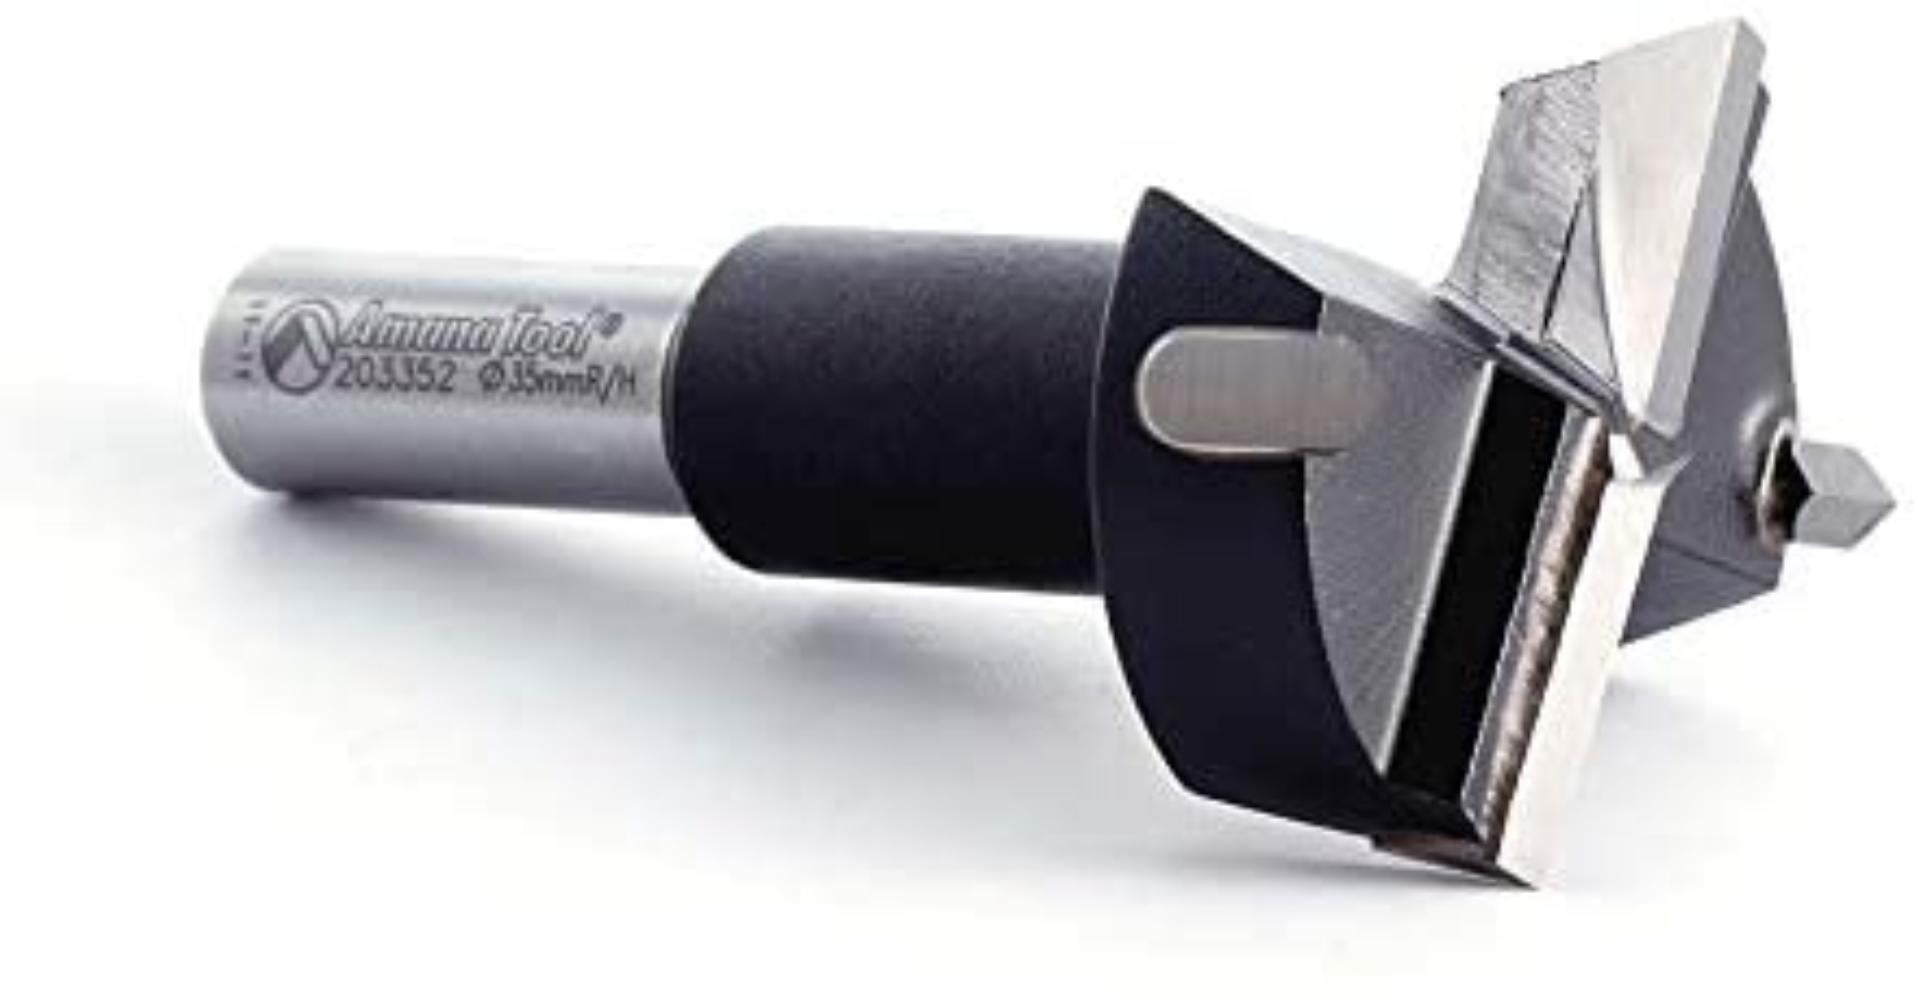 203352 Carbide Tipped Hinge Boring Bit R/H 35mm Dia x 70mm Long x 10mm Shank Amana Tool